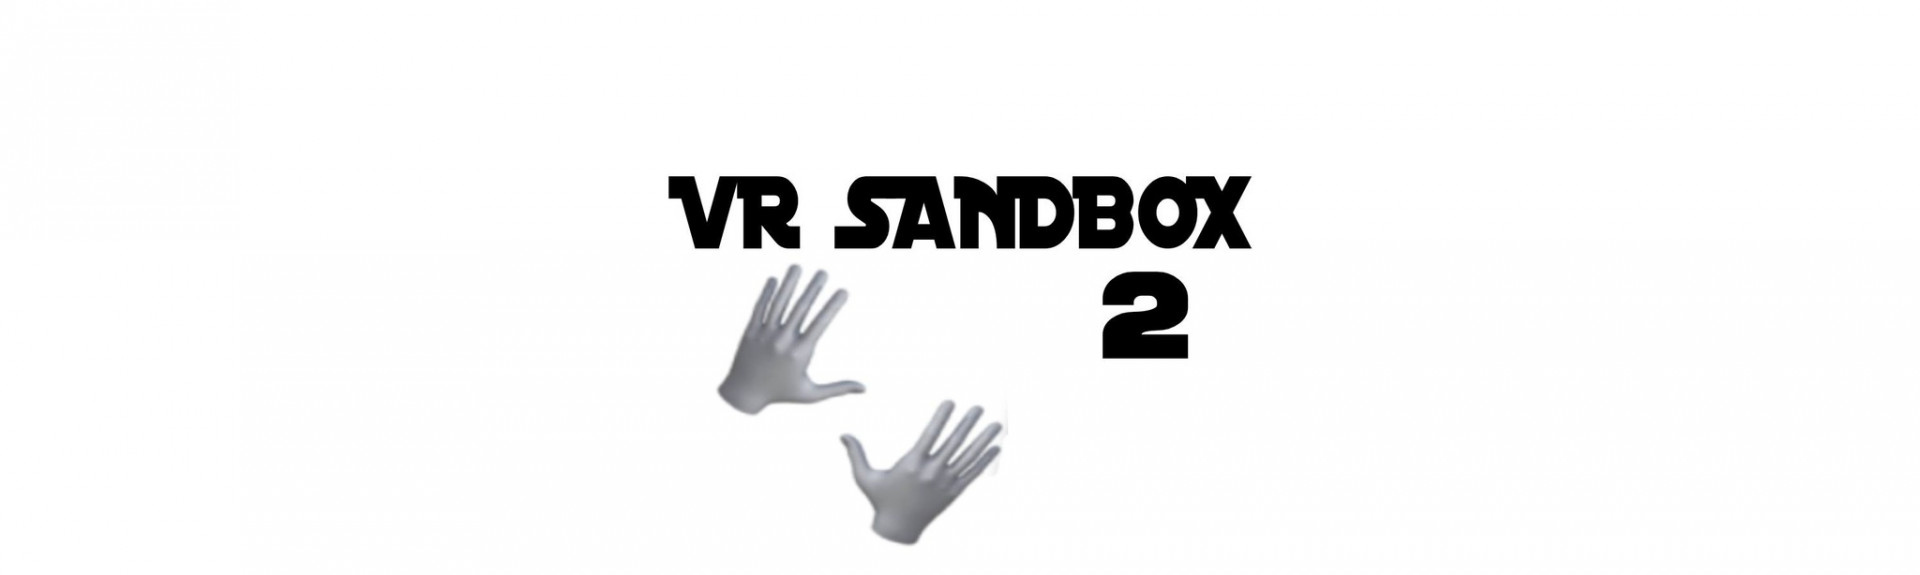 VR Sandbox 2